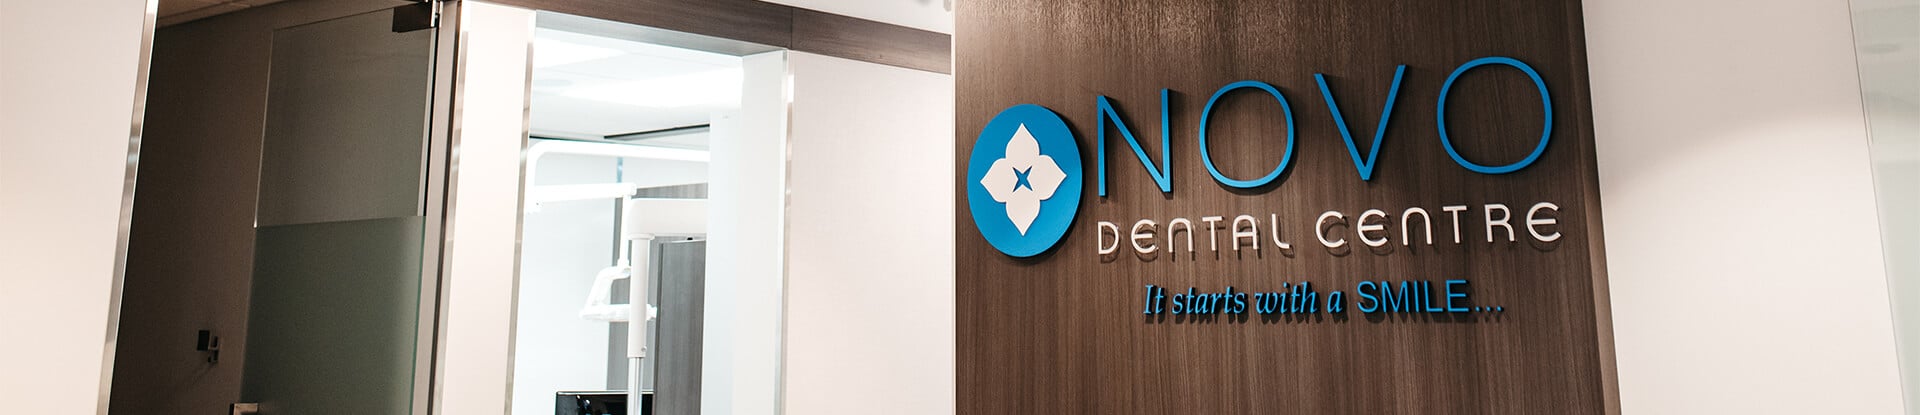 NOVO Dental Centre sign in clinic